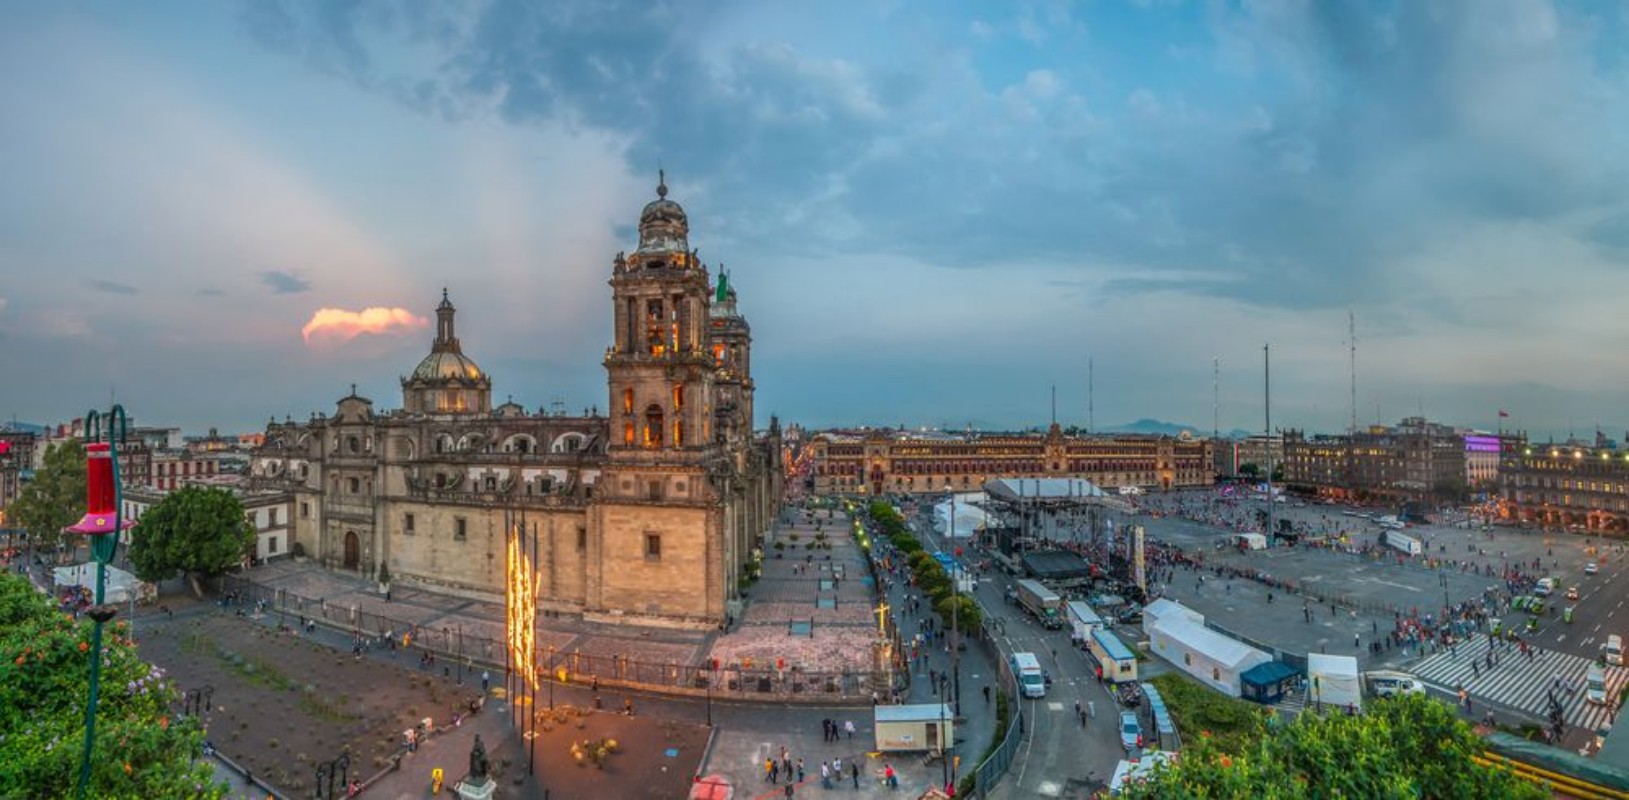 Image de Zocalo square and Metropolitan cathedral of Mexico city